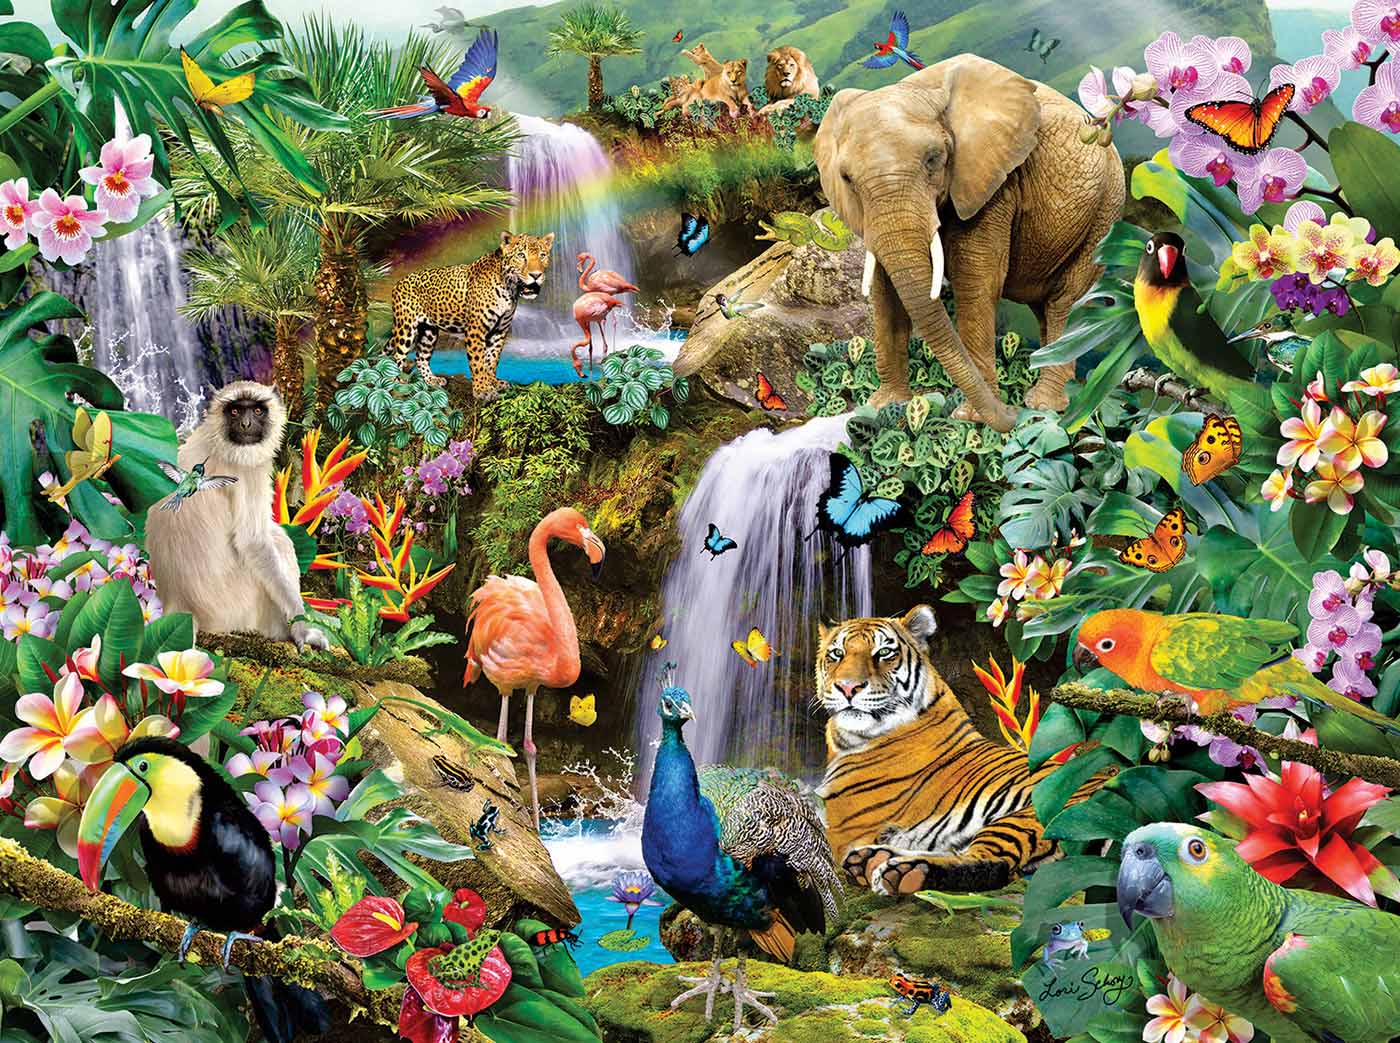 Secret Rainforest Animals Jigsaw Puzzle